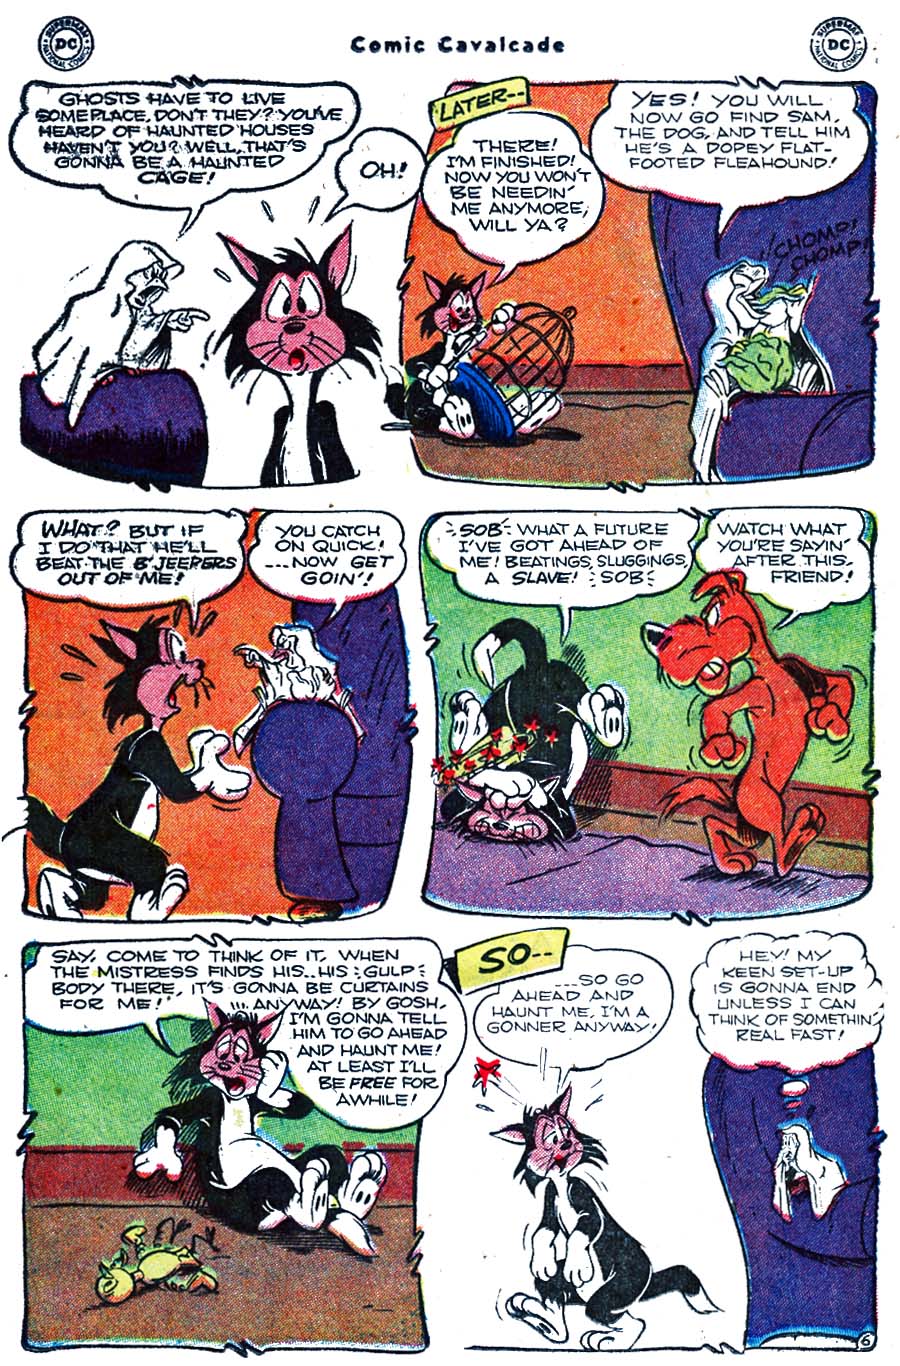 Comic Cavalcade issue 47 - Page 33